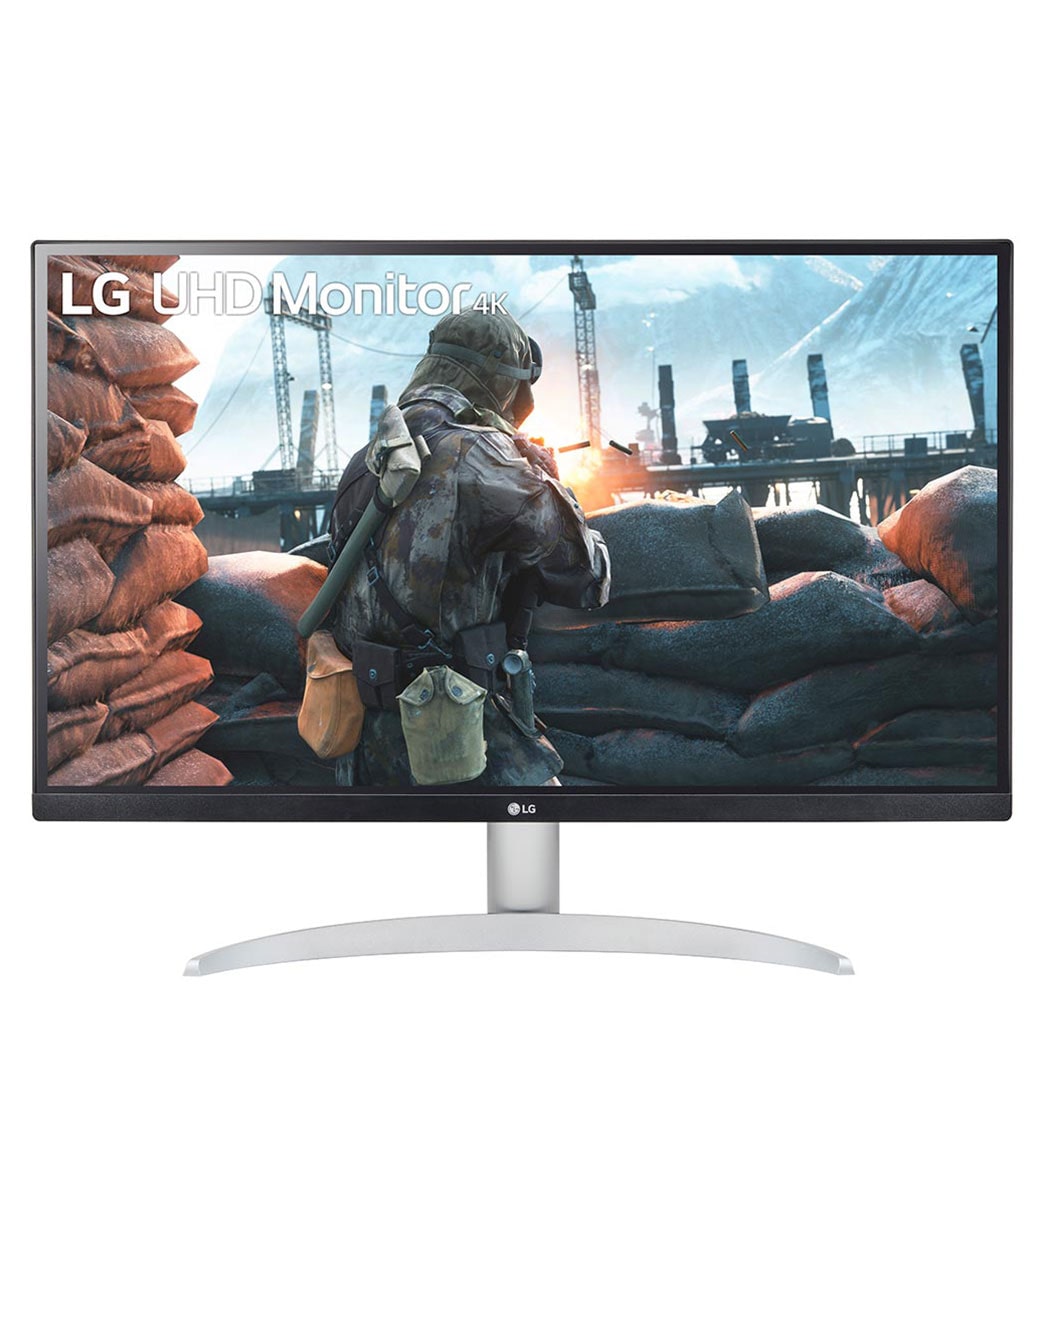 LG 27” IPS LED 4K UHD 60Hz AMD FreeSync Monitor with HDR (DisplayPort, HDMI)  Black 27UP600-W.AUM - Best Buy